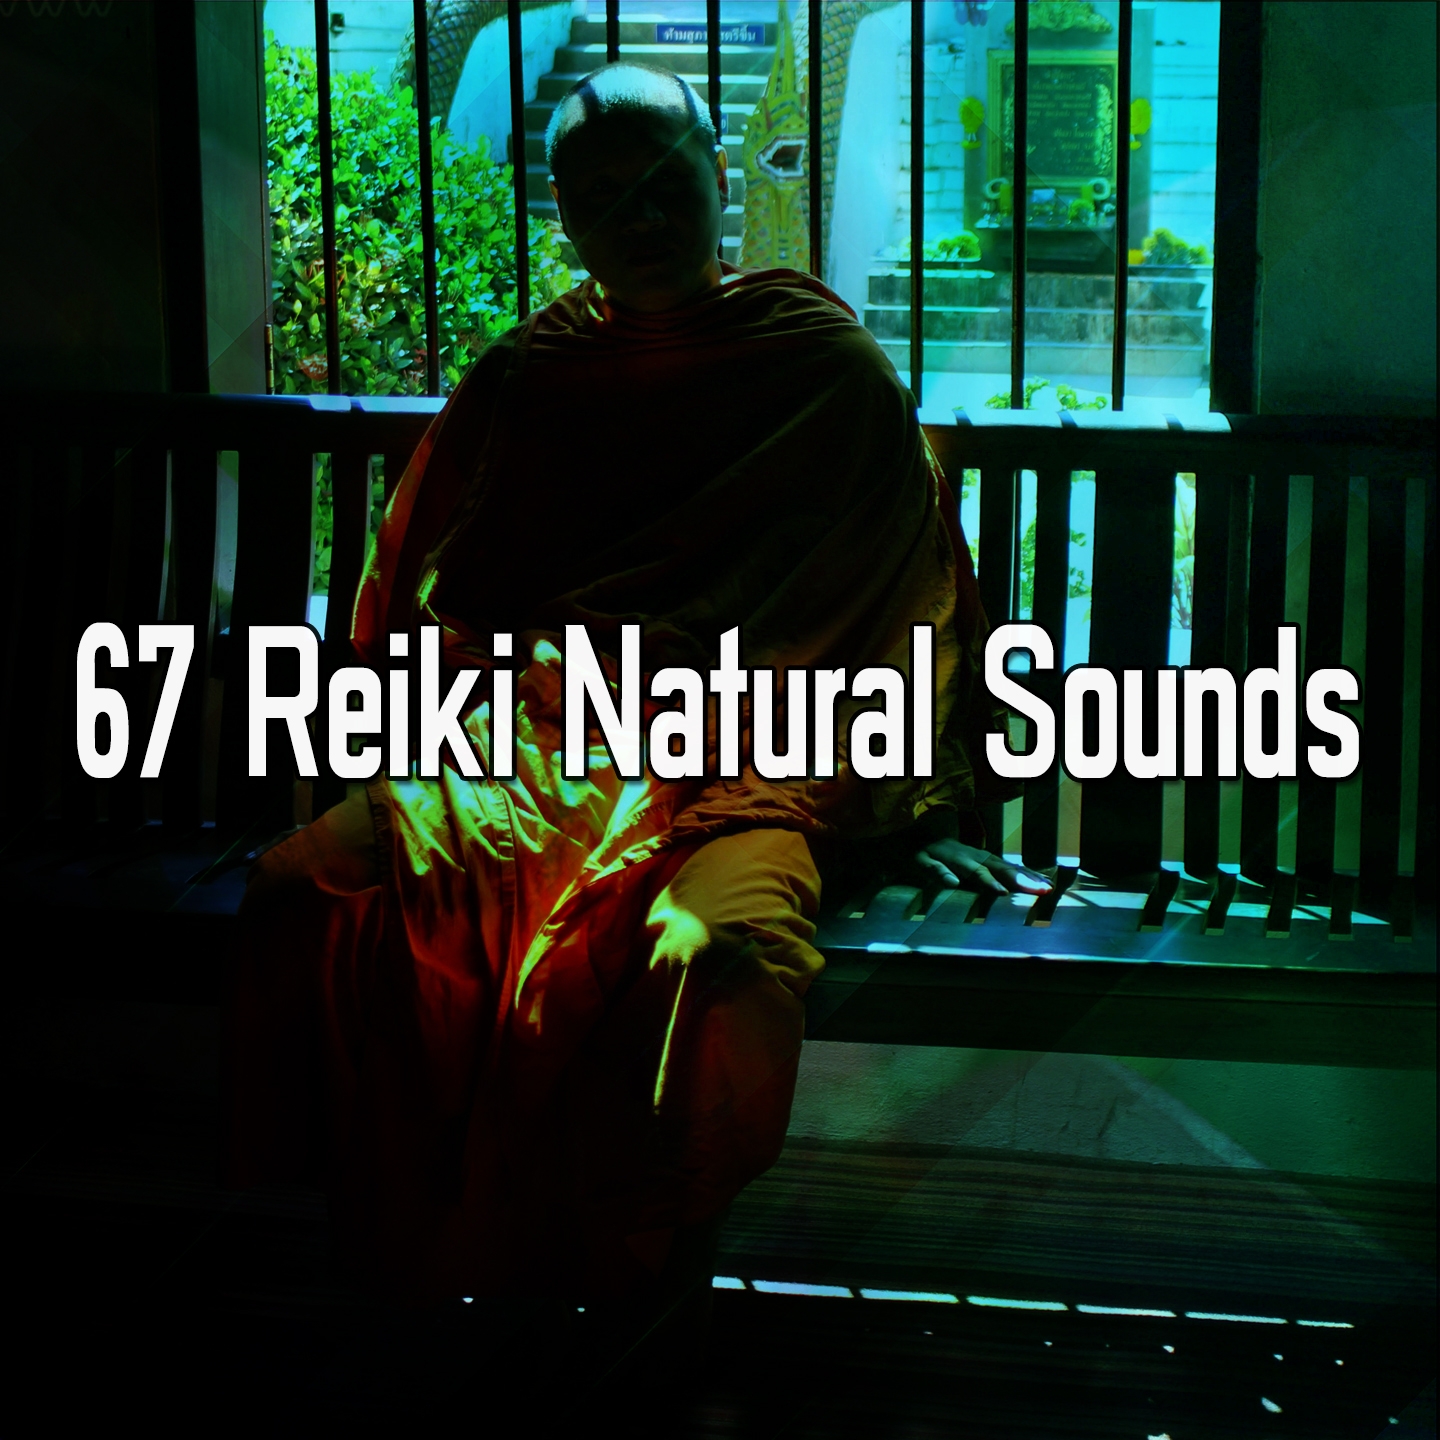 67 Reiki Natural Sounds